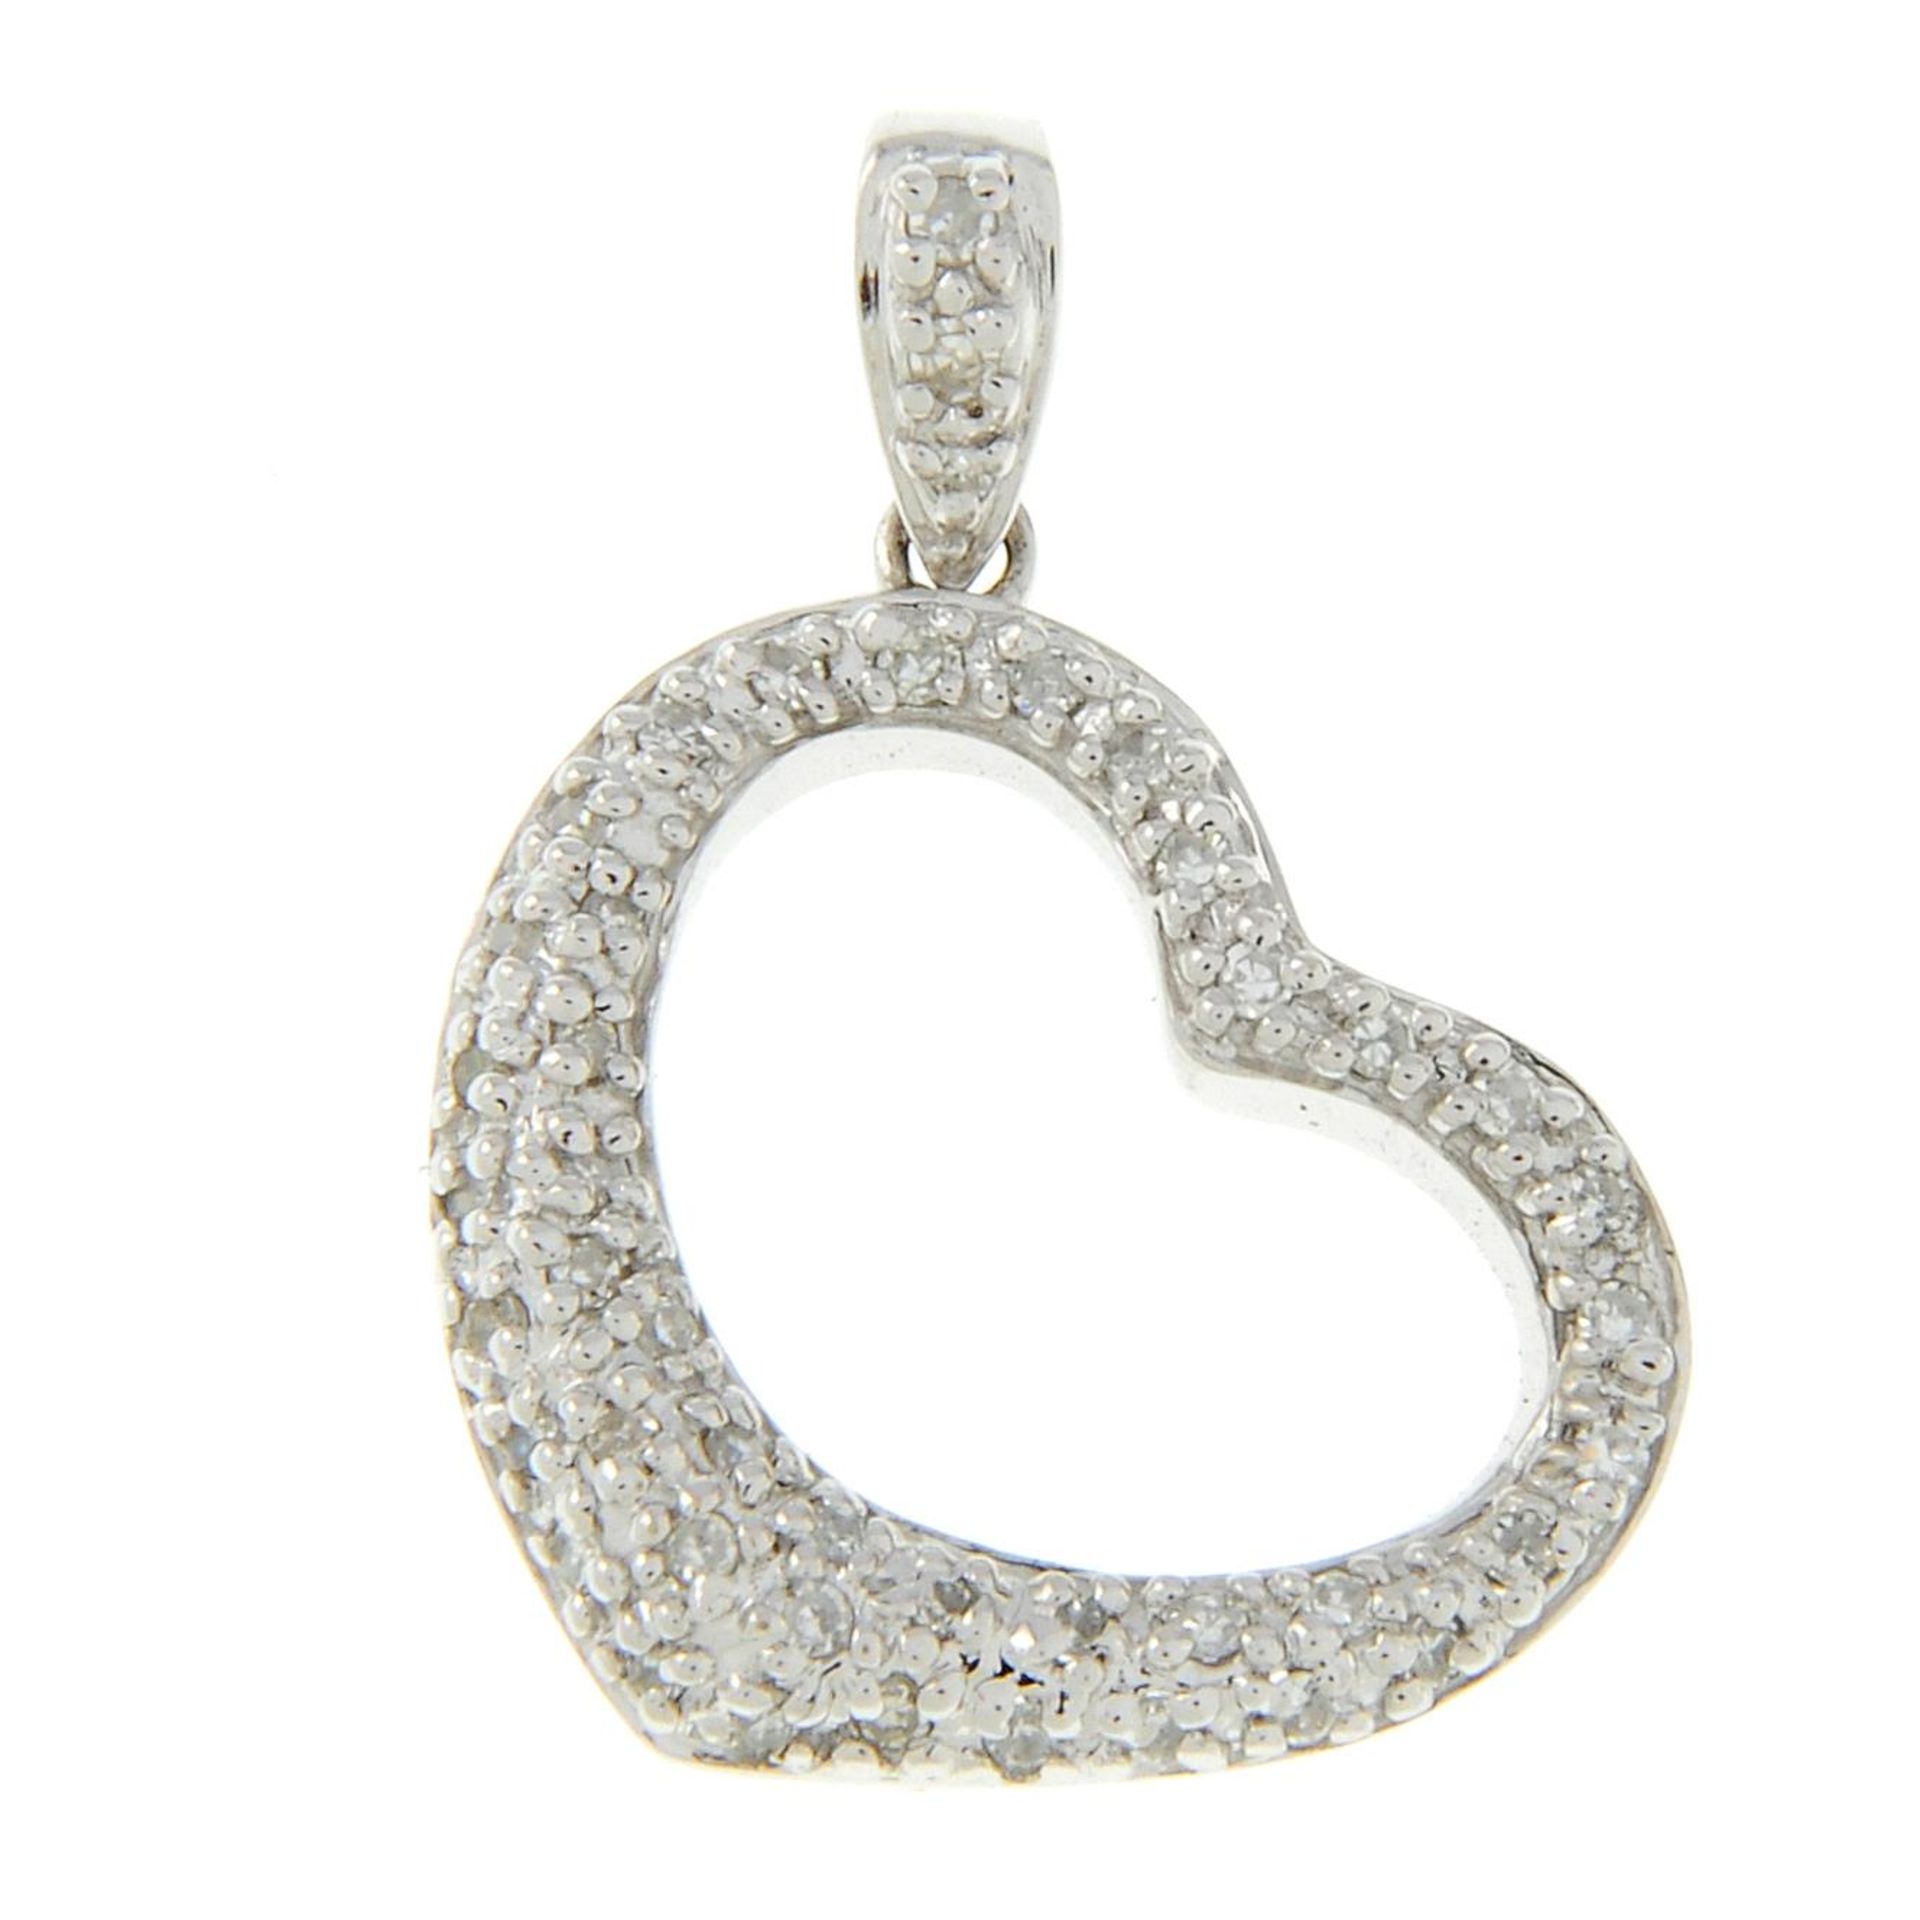 A 9ct gold pave-set diamond heart pendant.Total diamond weight 0.27ct,